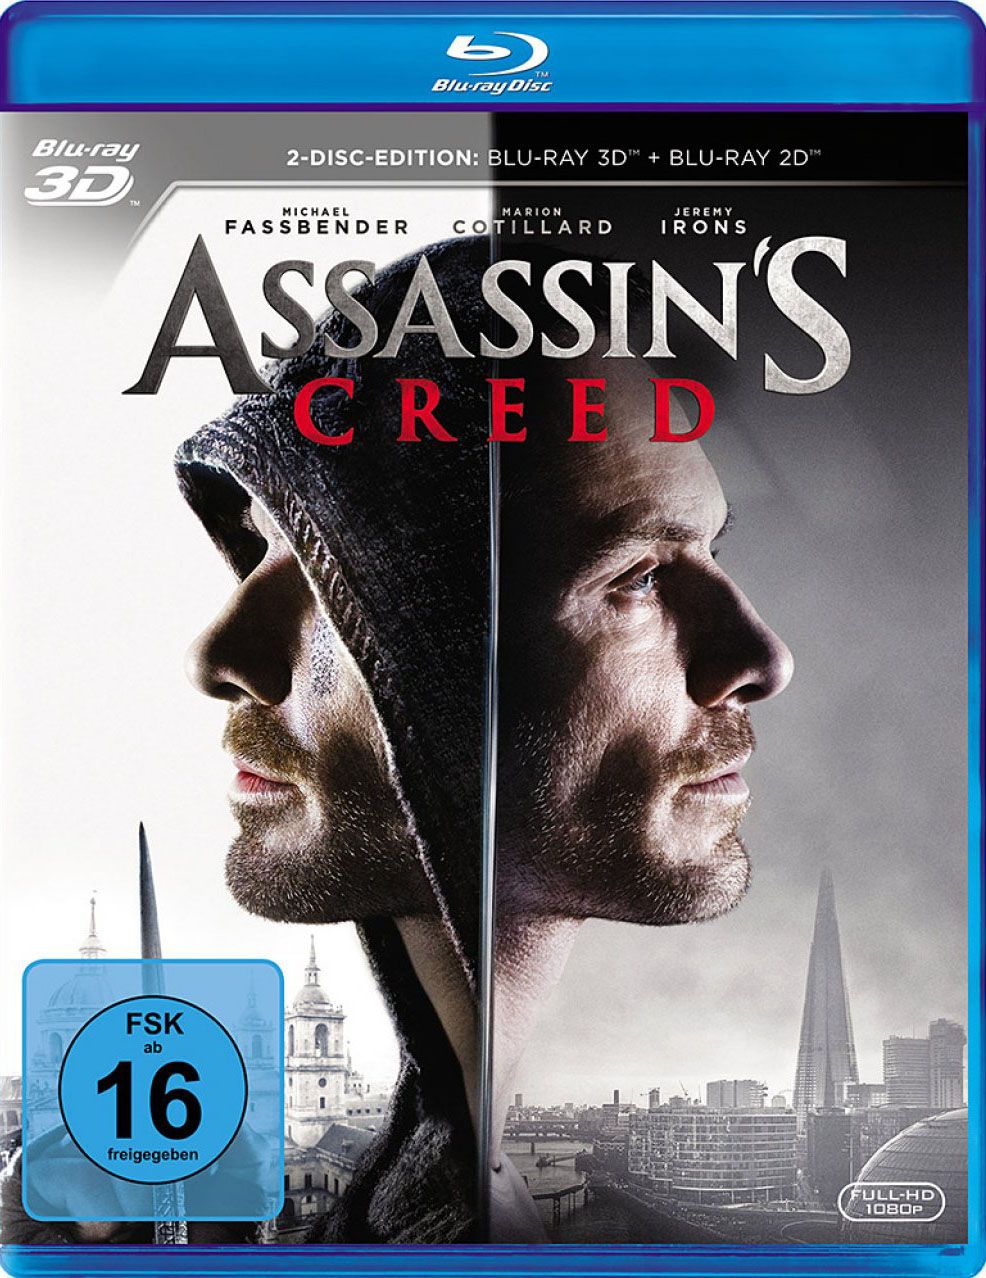 Assassin's Creed 3D (2 Discs) (BLURAY + BLURAY 3D)